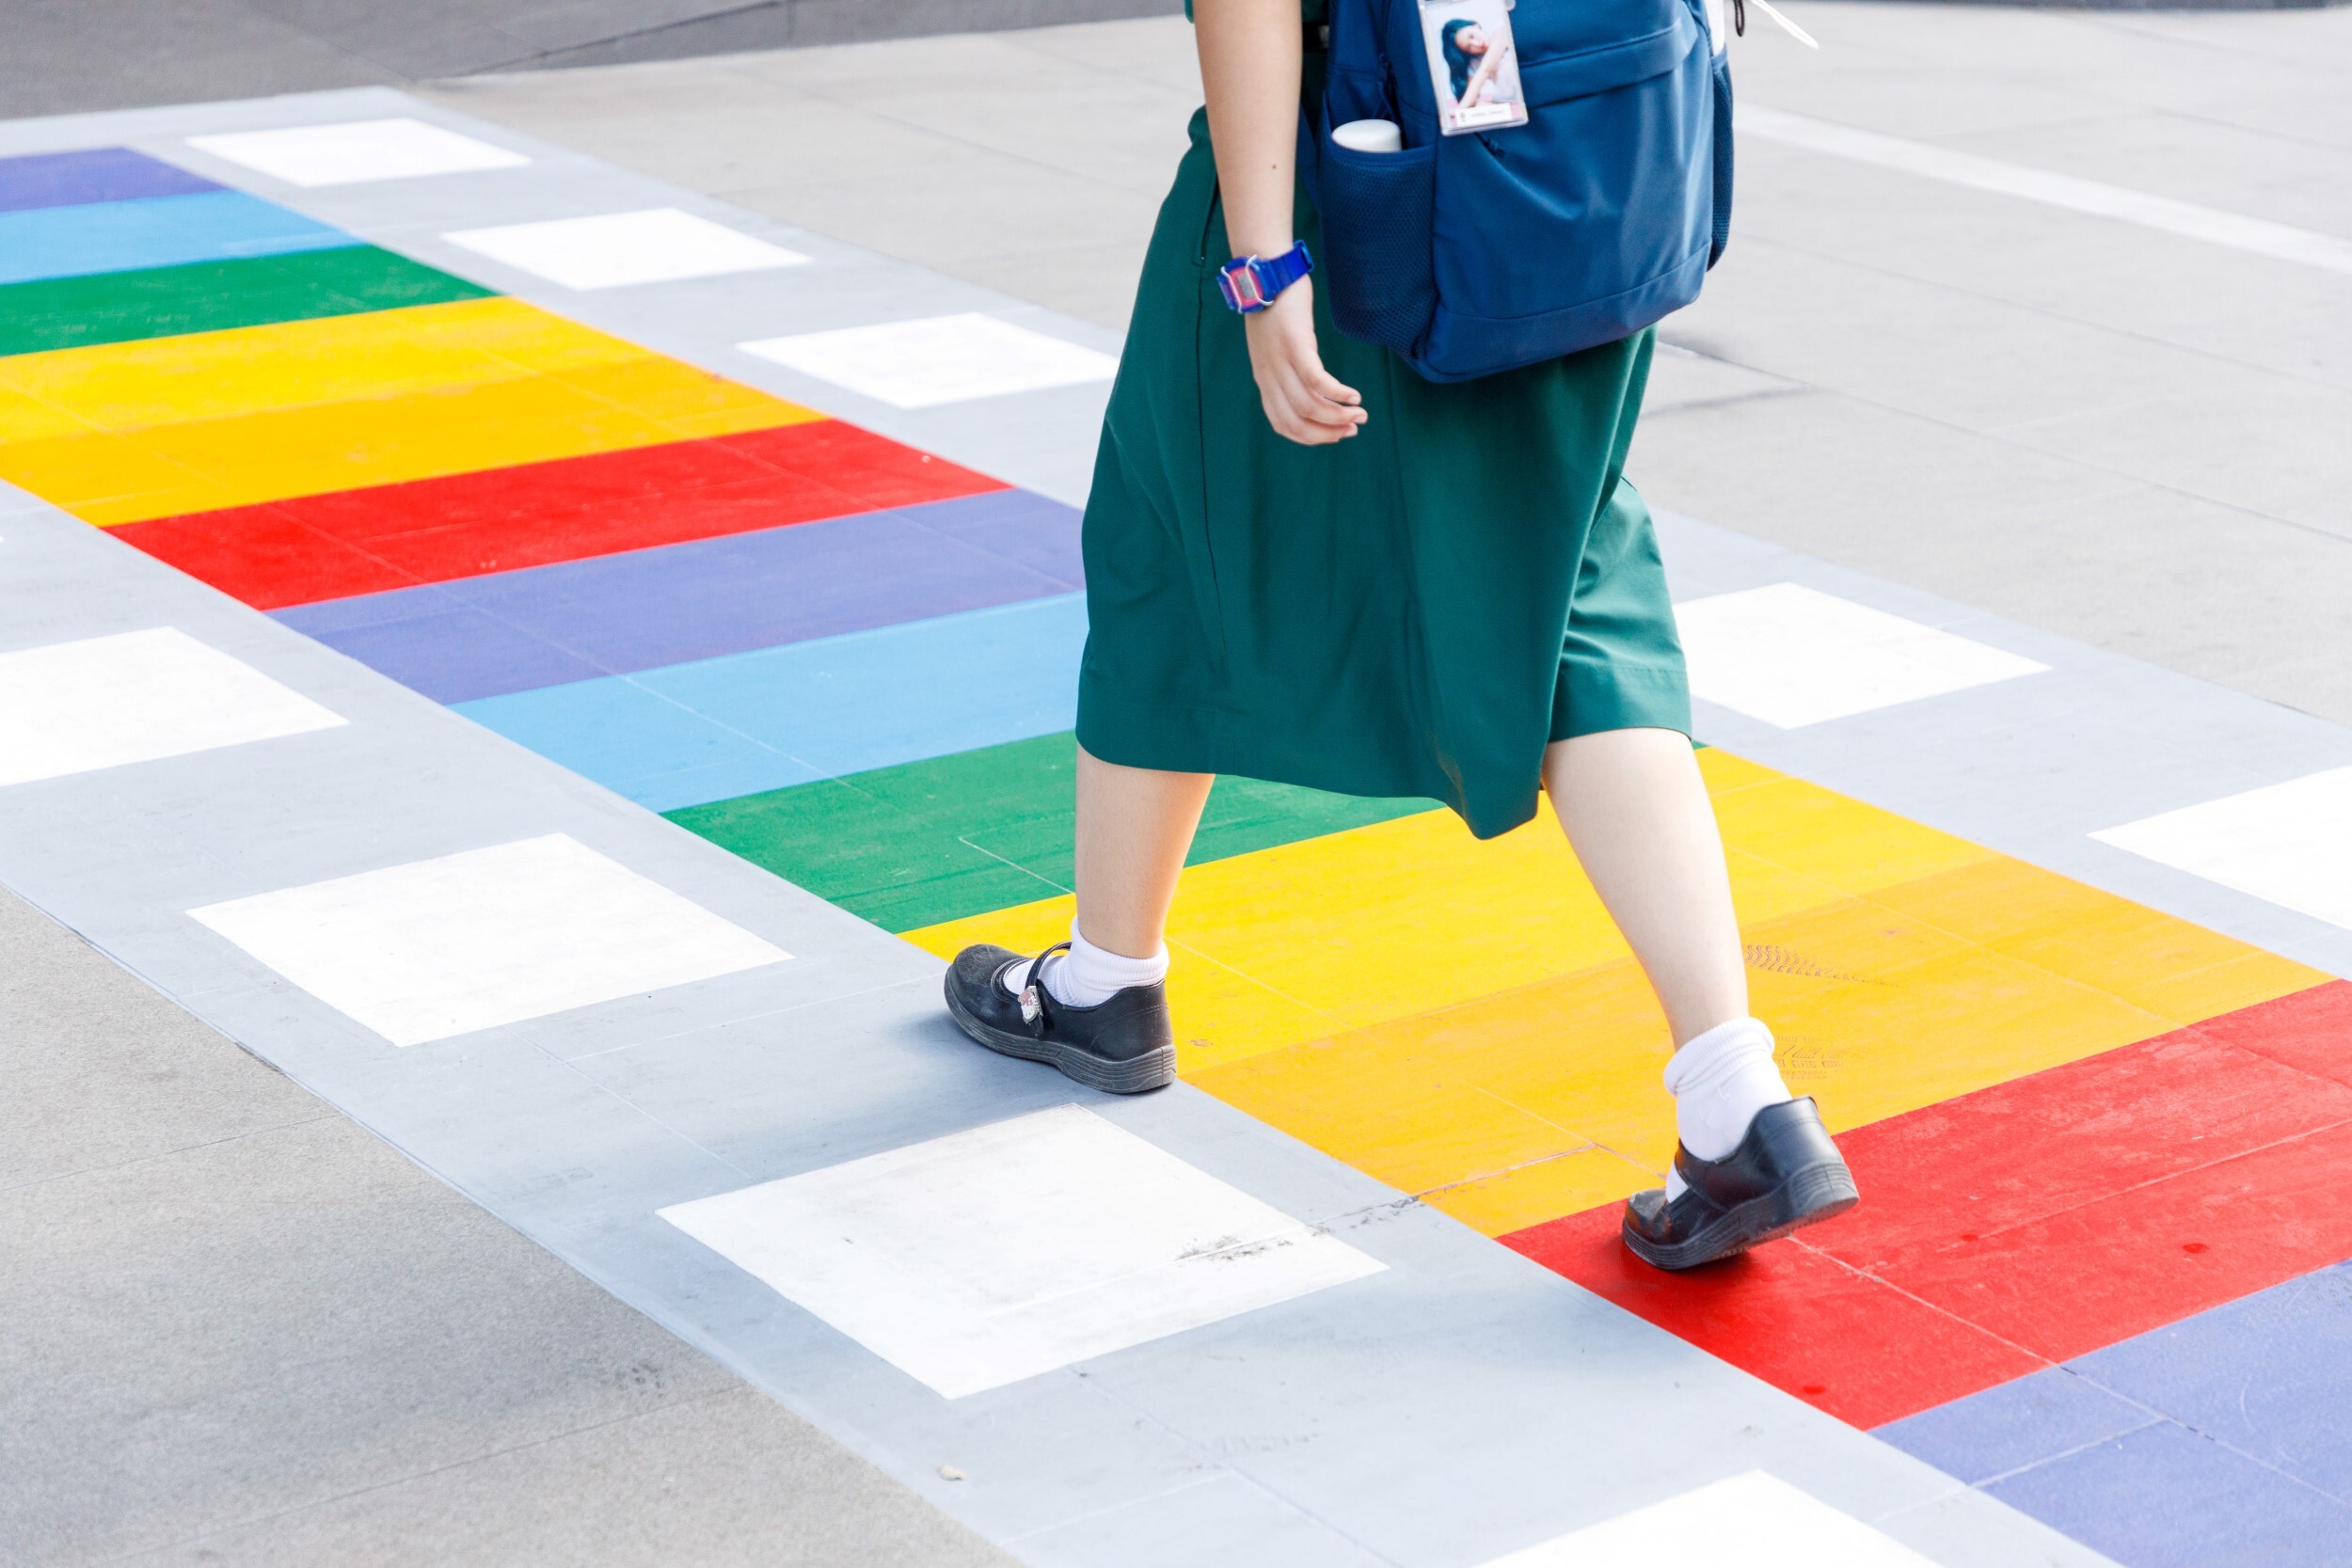 TOA ร่วมฉลอง Pride Month ด้วยสีสันแห่งความหลากหลาย เนรมิตทางม้าลายสีรุ้ง เชื่อมต่อทุกพื้นที่ @สามย่านมิตรทาวน์